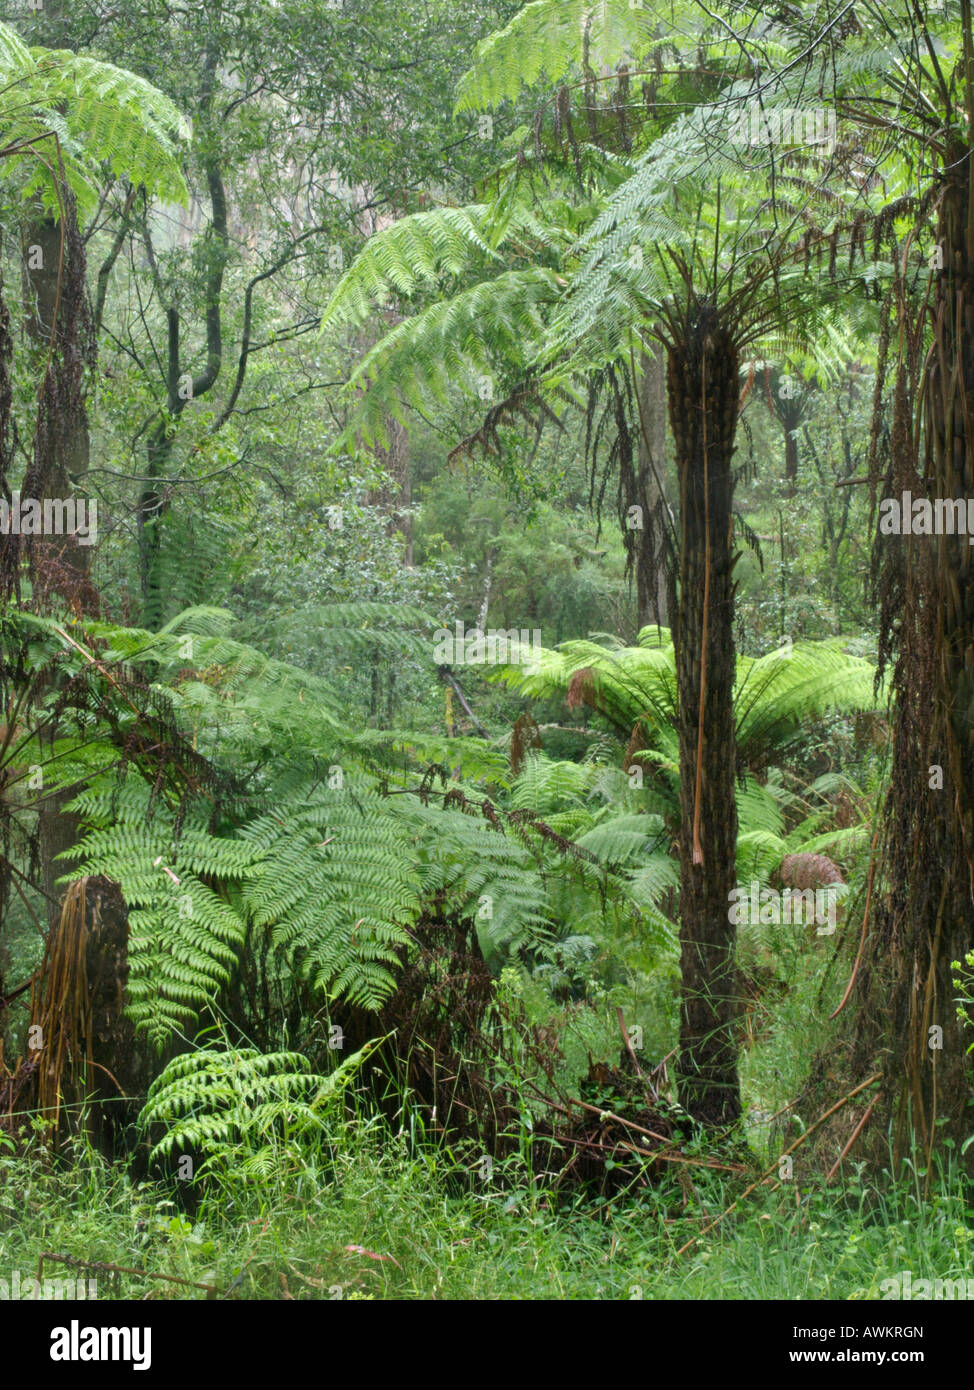 Tree fern (Dicksonia antarctica), Dandenong Ranges National Park, Melbourne, Australia Stock Photo